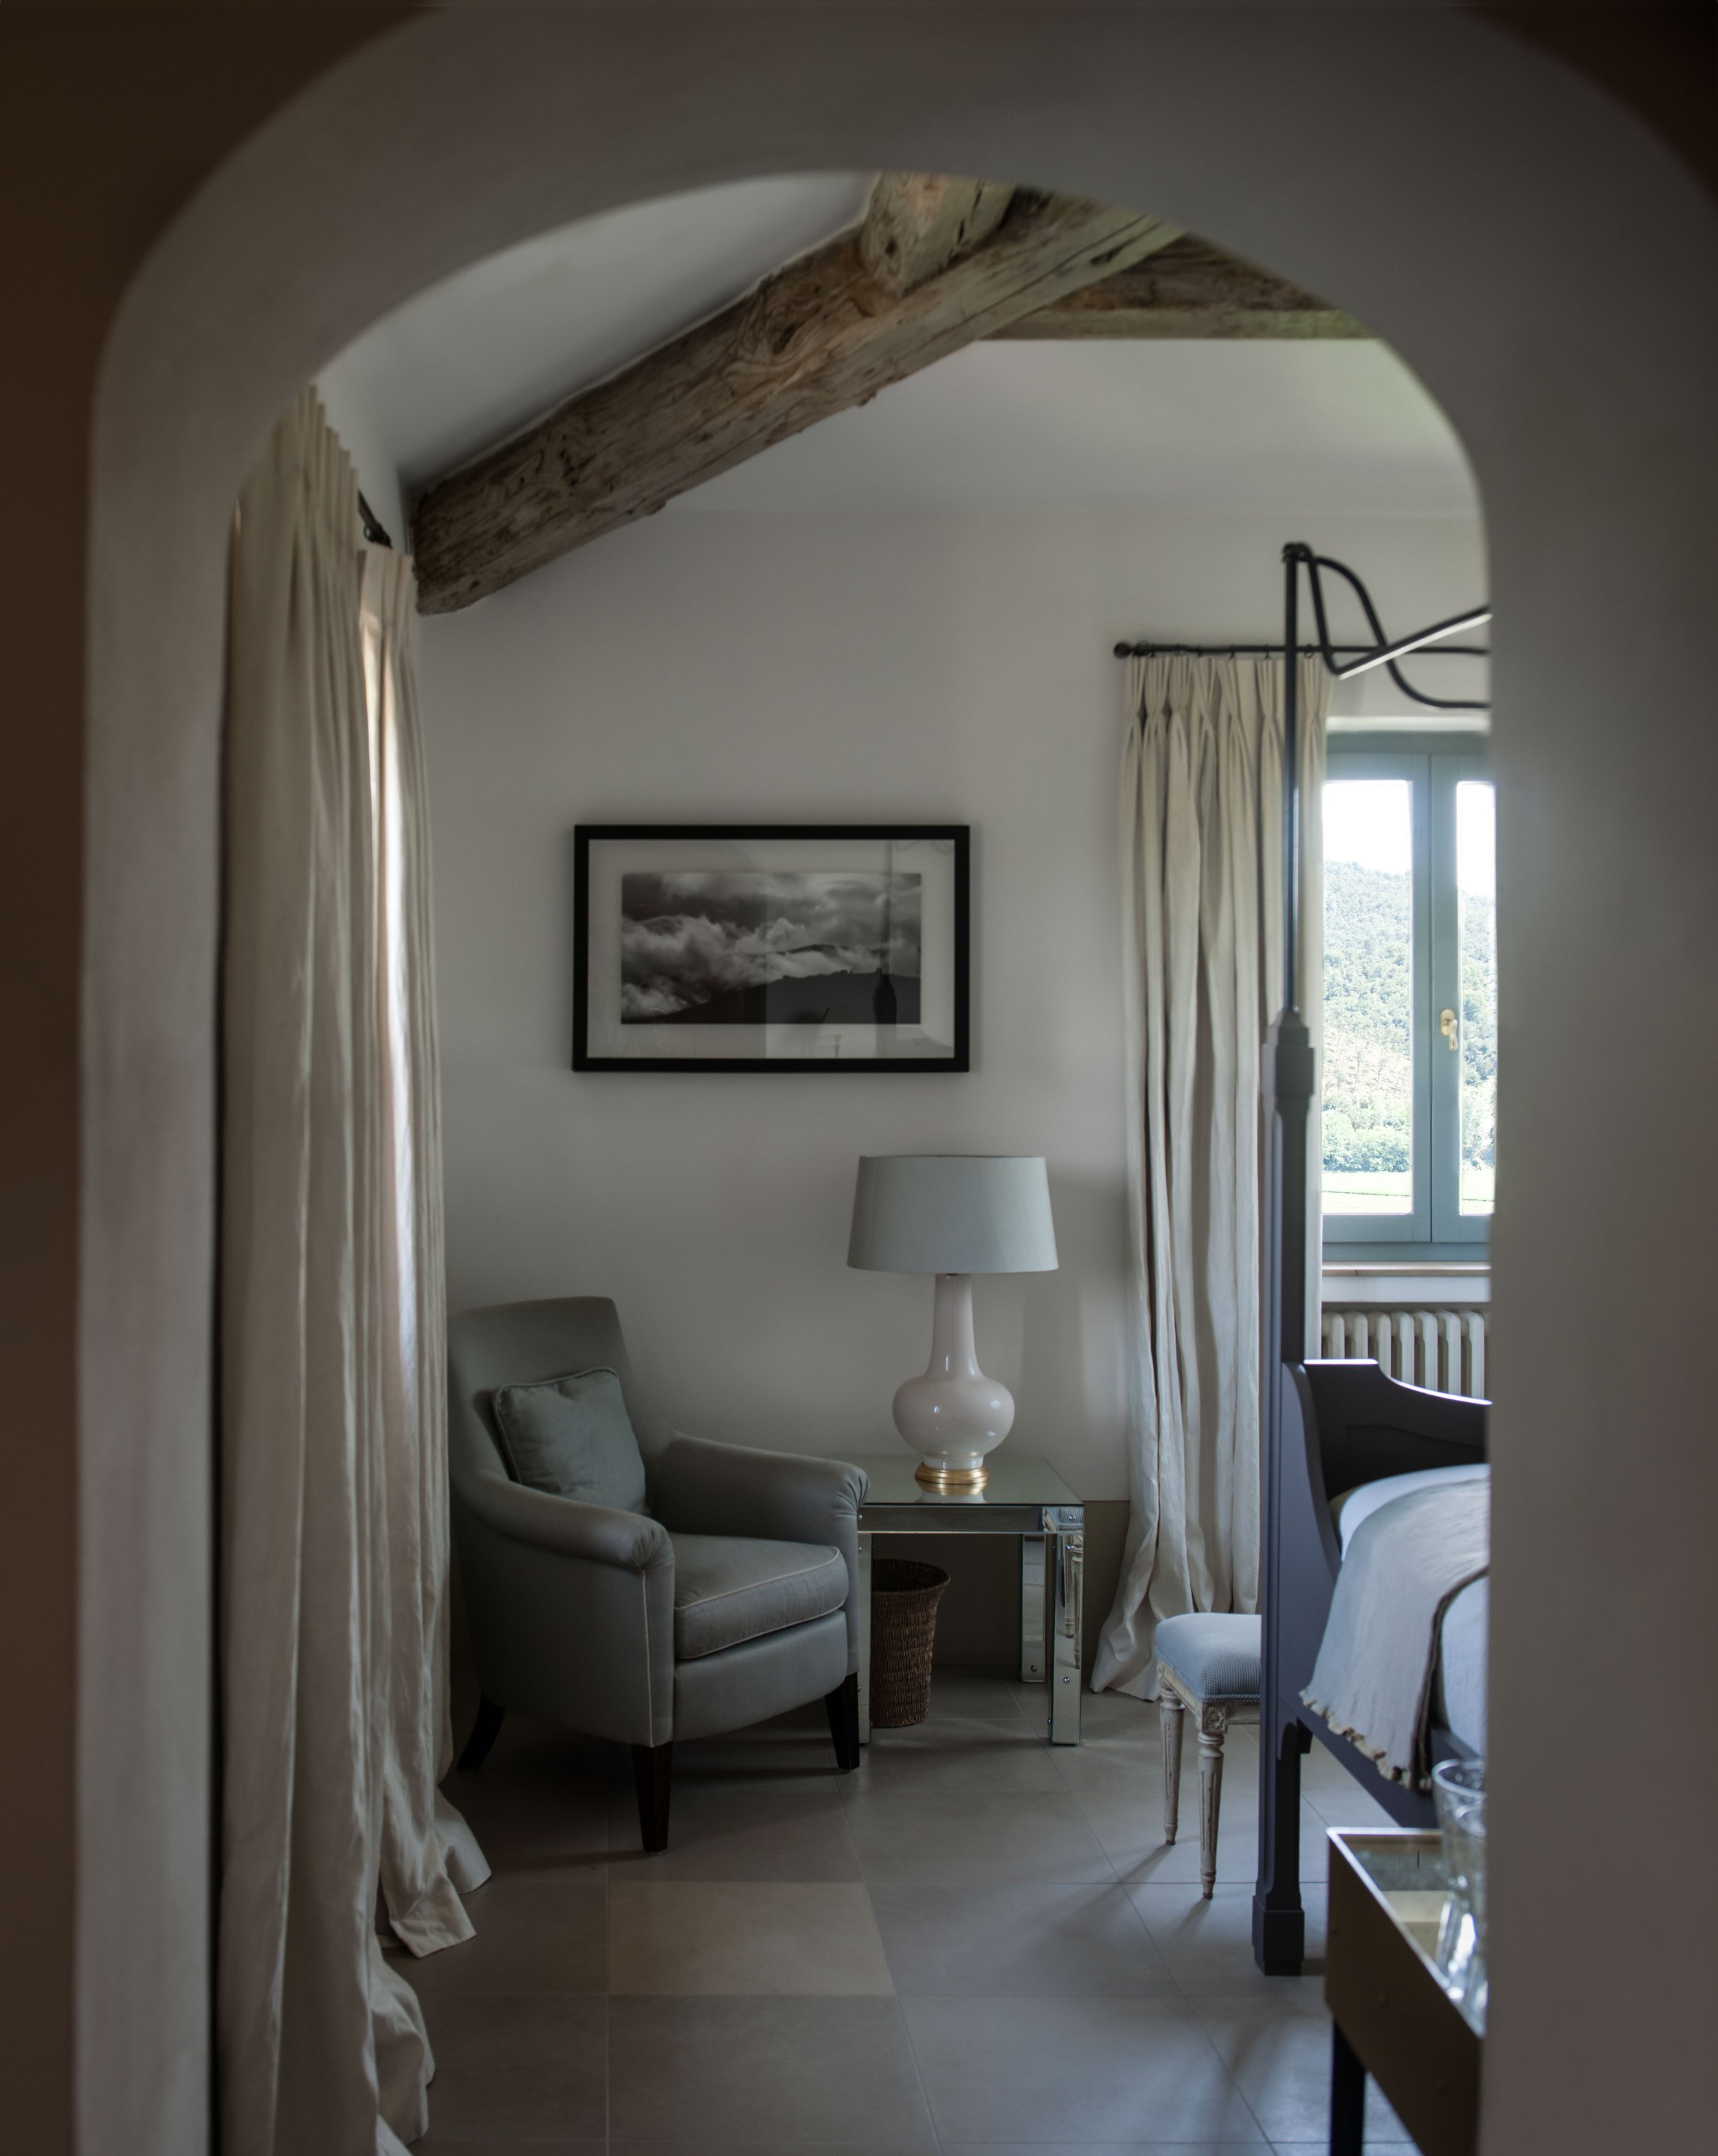 Francis York Exclusive Luxury Villa Rental in Umbria, Italy 13.jpg